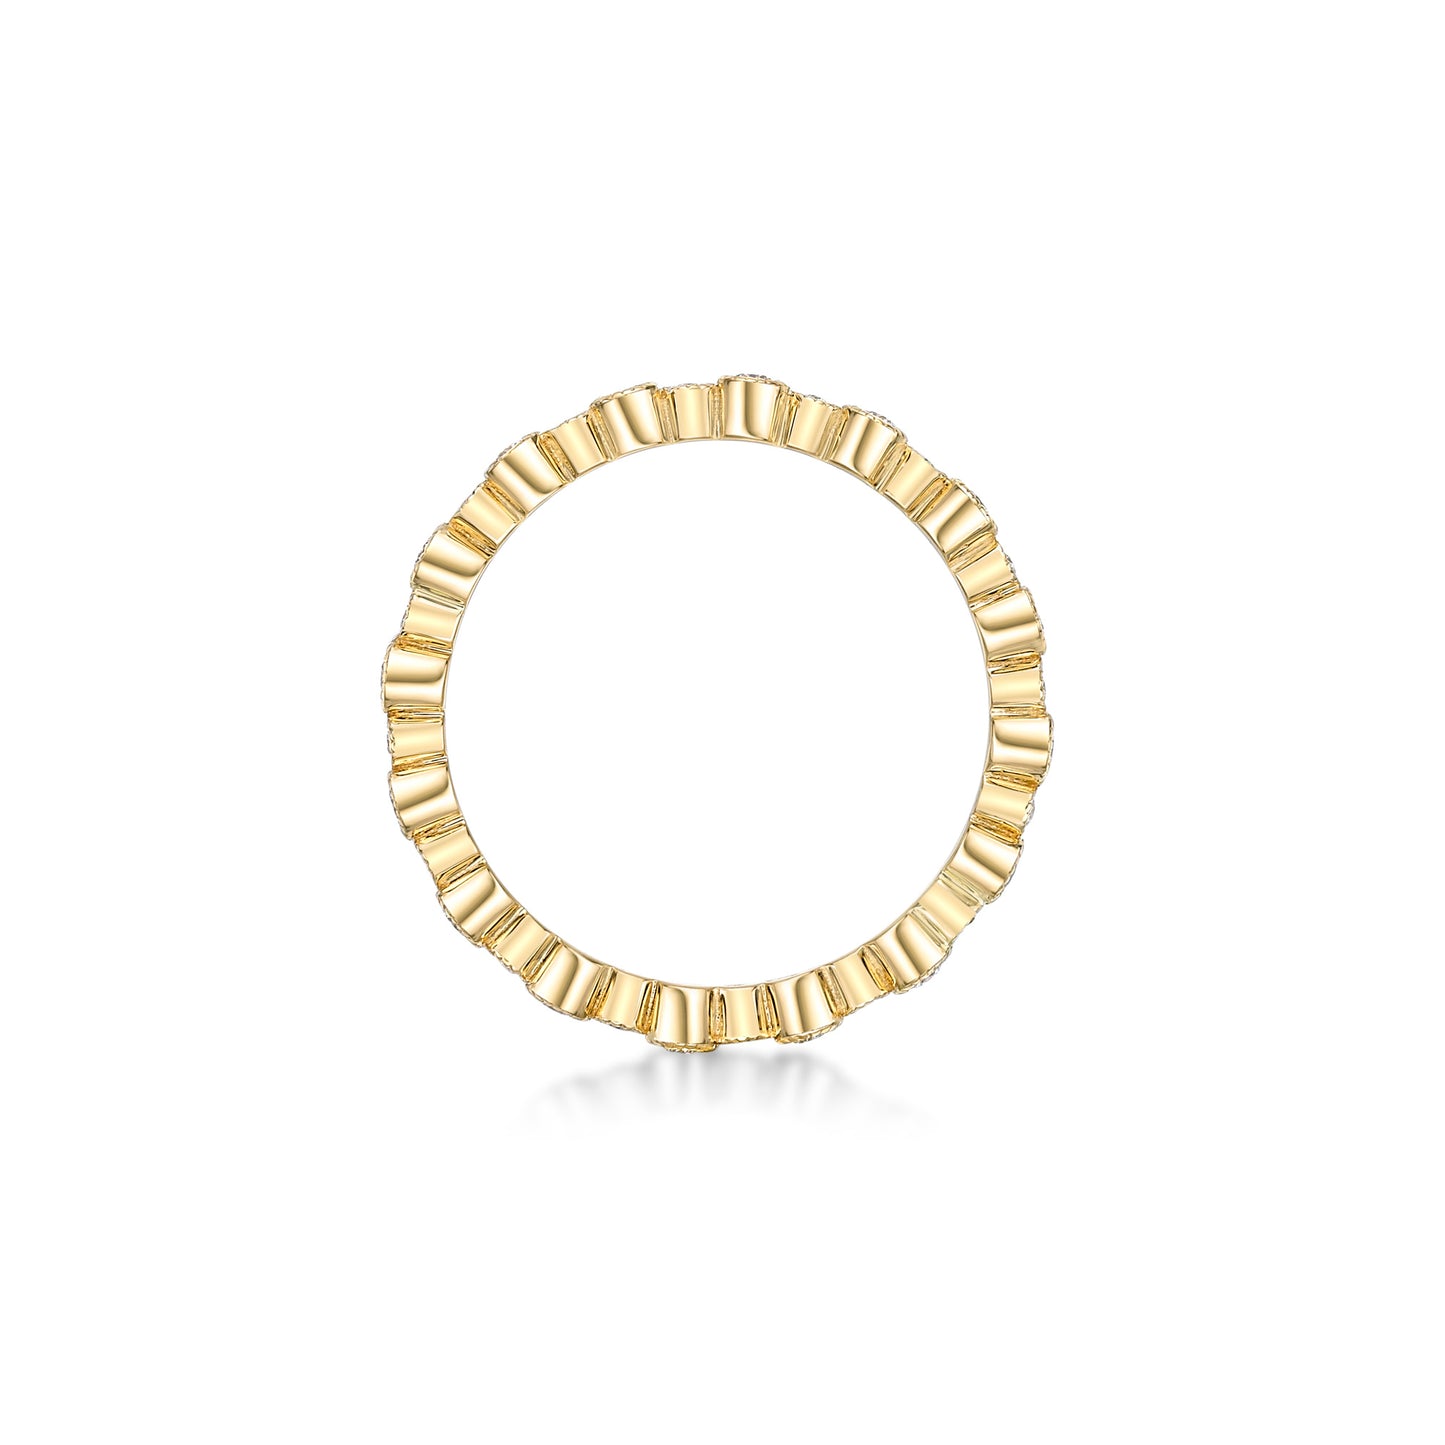 Vintage style Bezel ring with alternating sizes of Round brilliant diamonds, hand-milgrain detailing